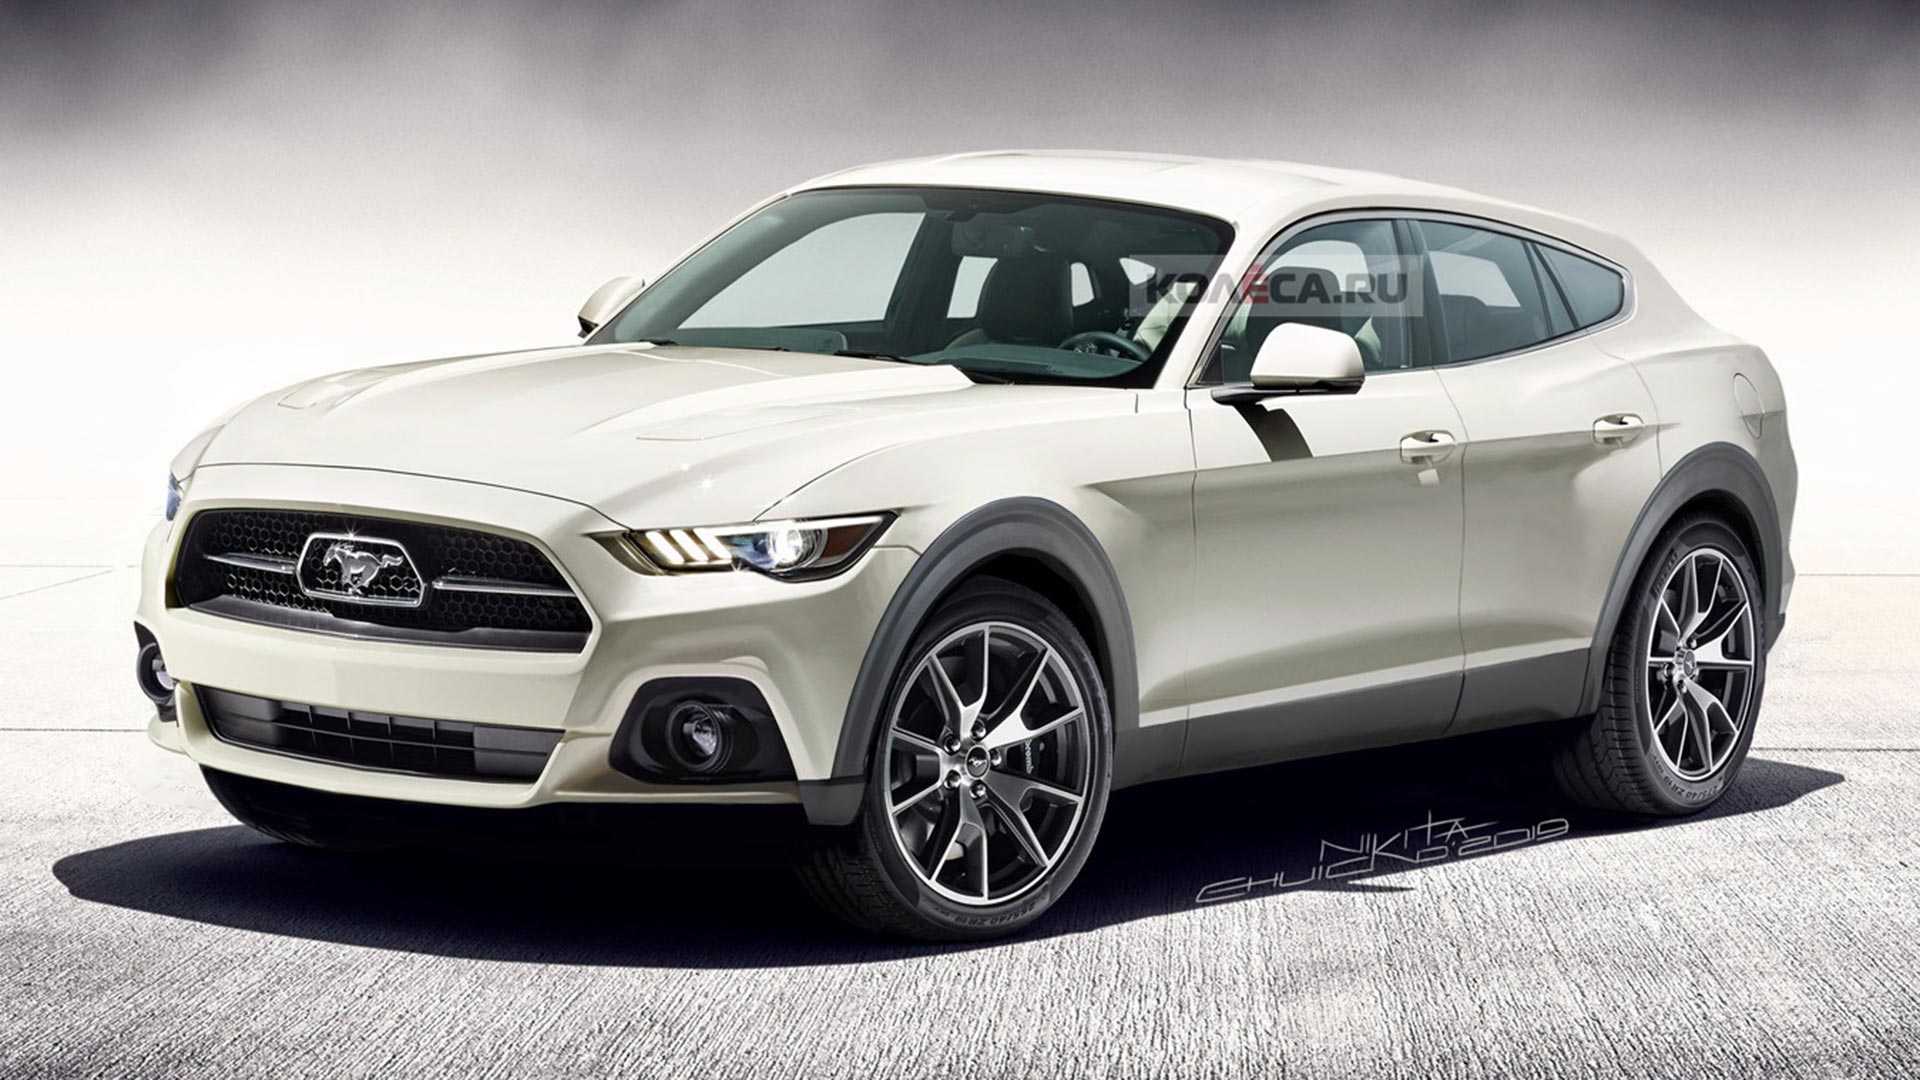 Ford วางแผนขยายกองทัพ เปลี่ยน Mustang เป็นรถไฟฟ้าในร่างของ Crossover อาจเผยโฉมปี 2020 2